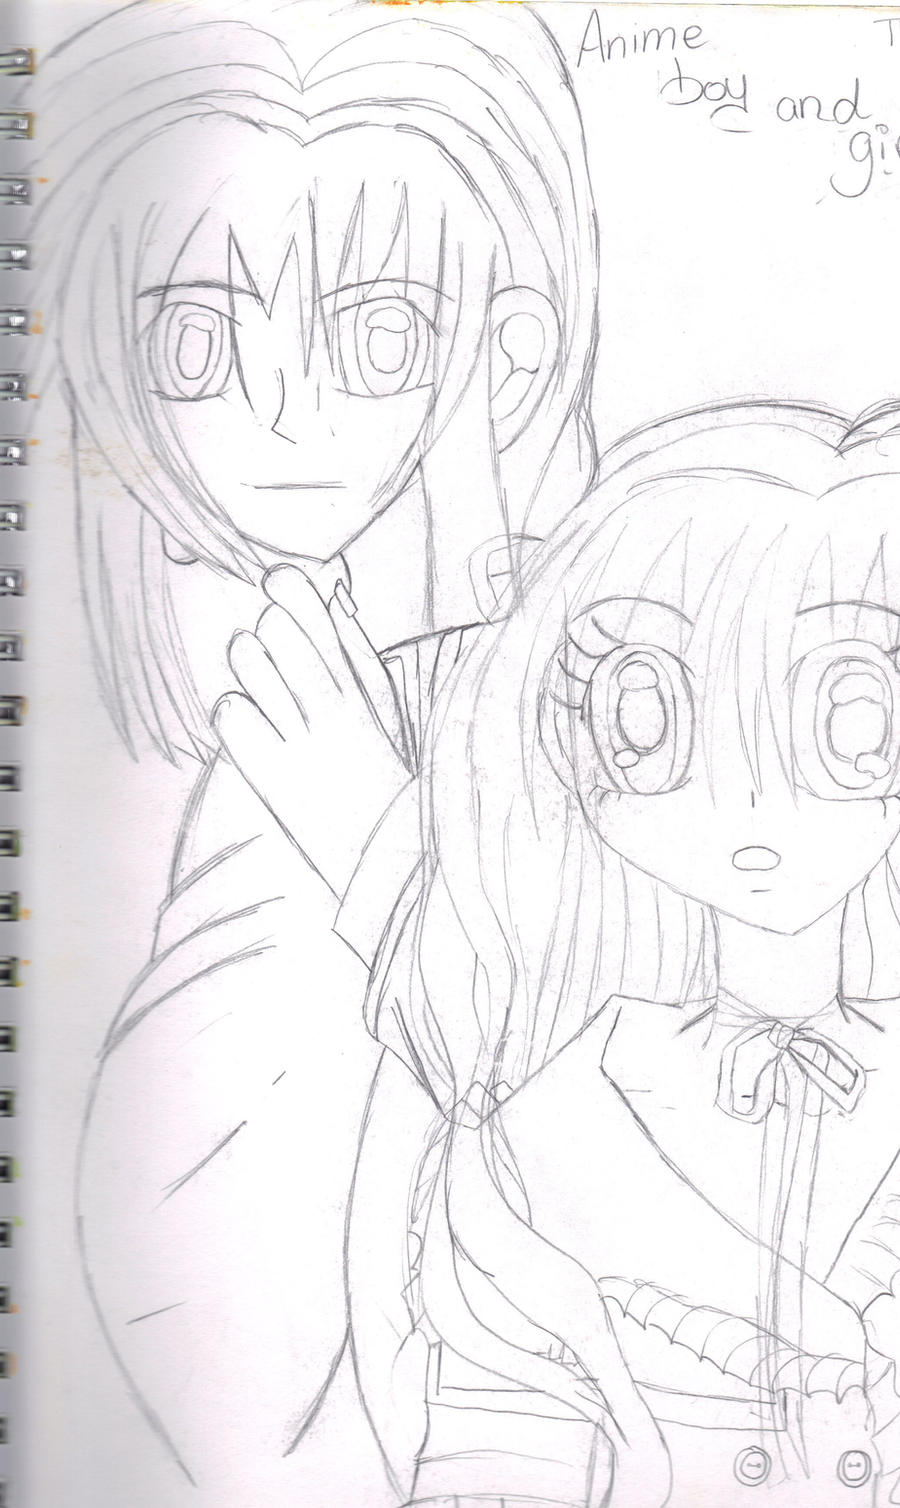 Anime Boy And Girl Sketch By Princessjulia10 On Deviantart